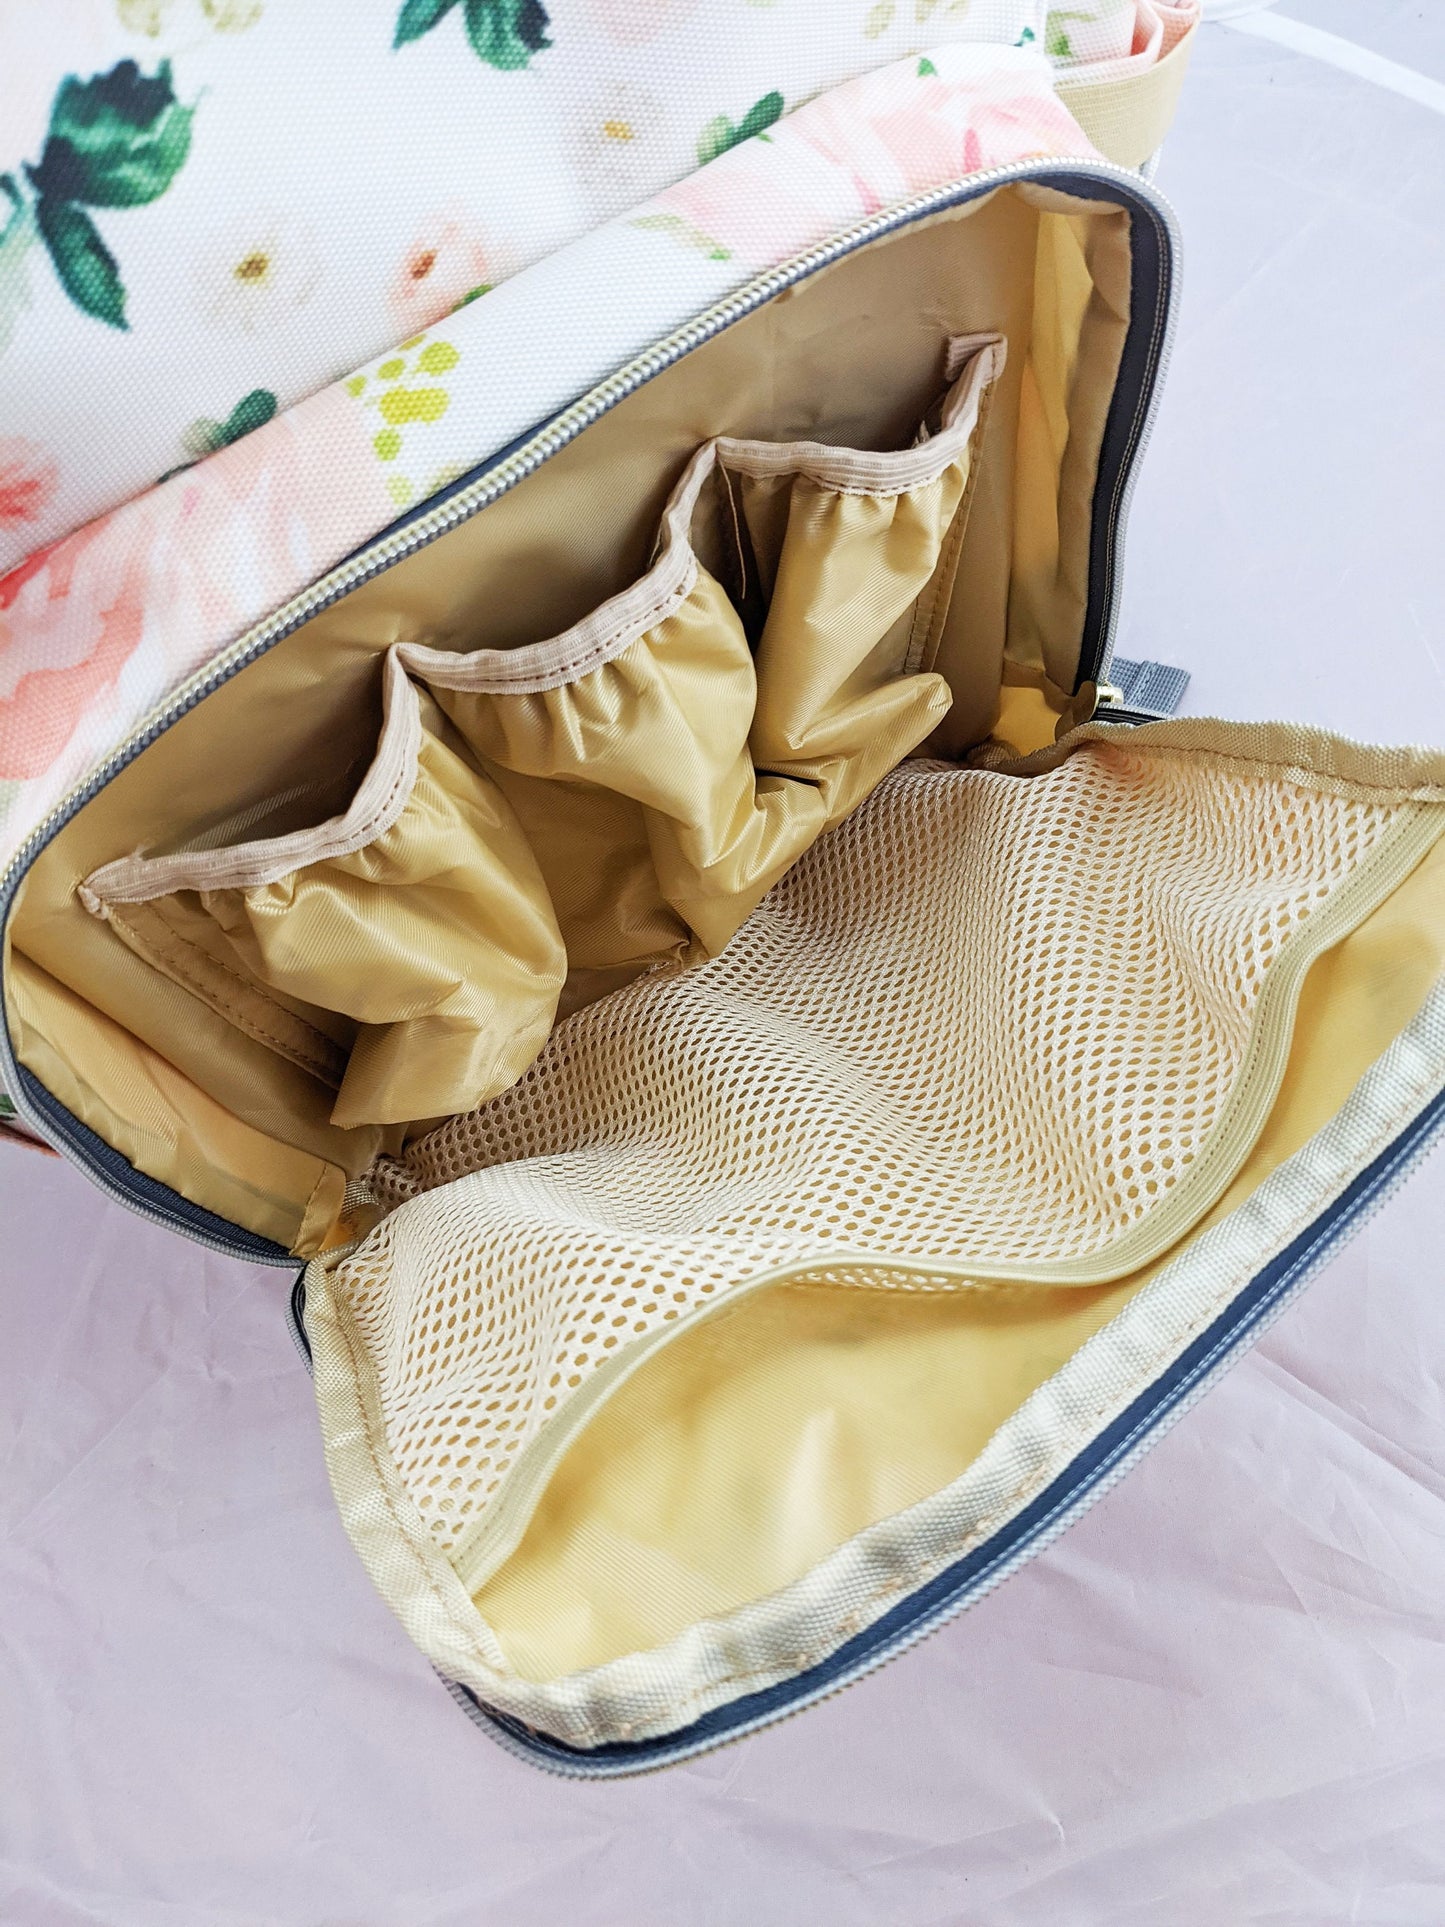 Blush Florals with Castle Personalized Diaper Bag